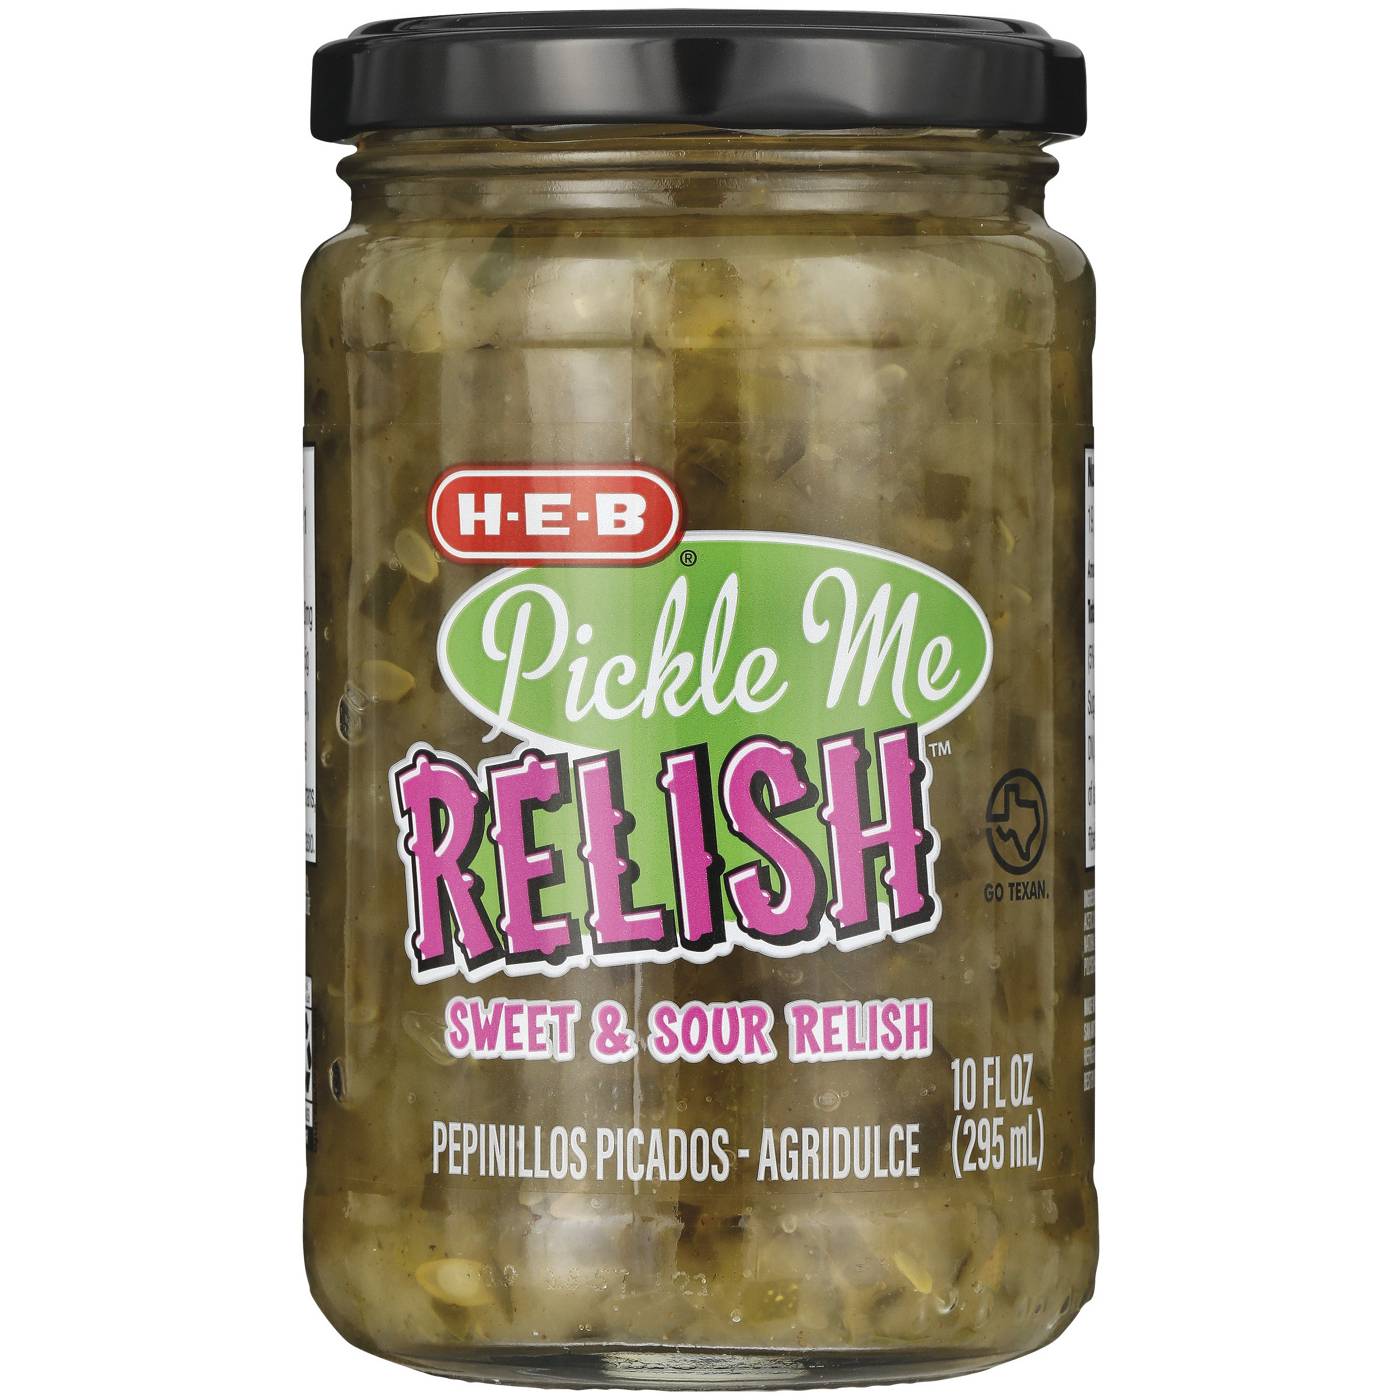 H-E-B Pickle Me Relish Sweet & Sour Relish; image 1 of 2